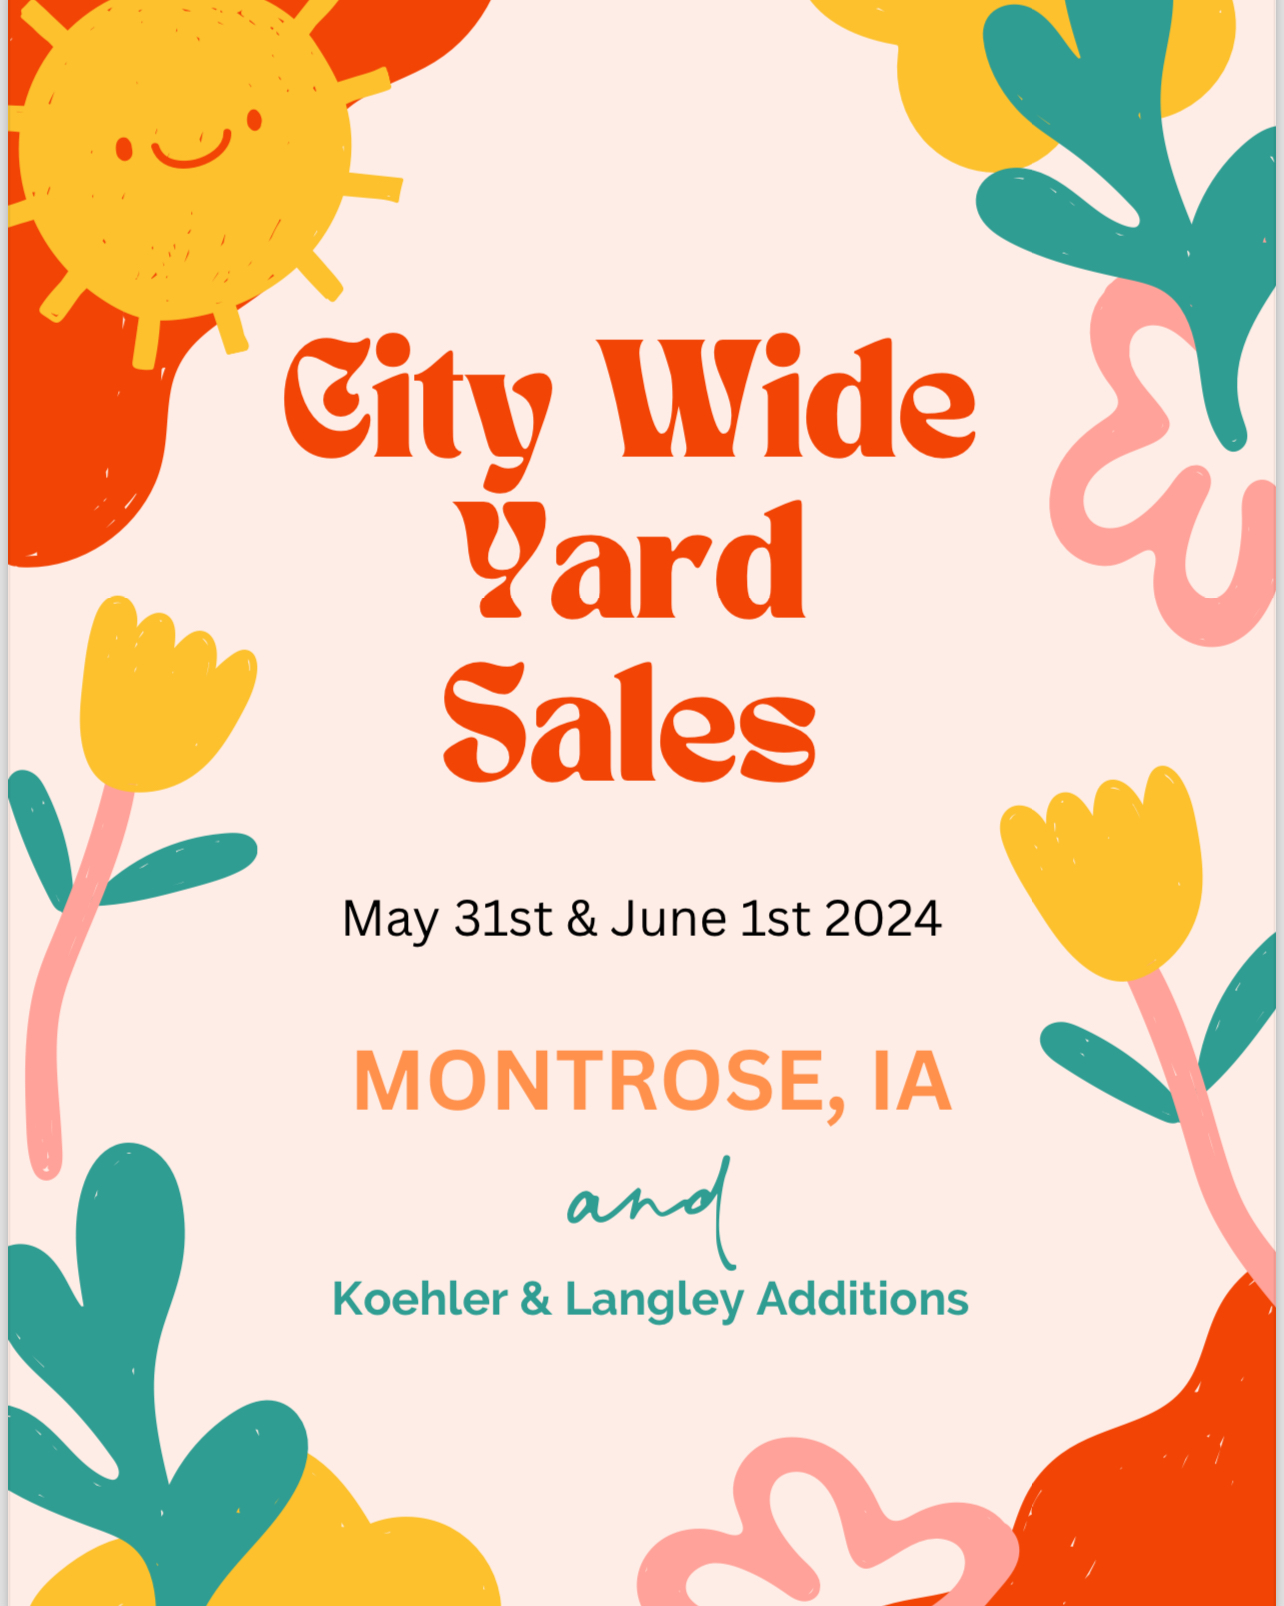 Yard Sale flyer